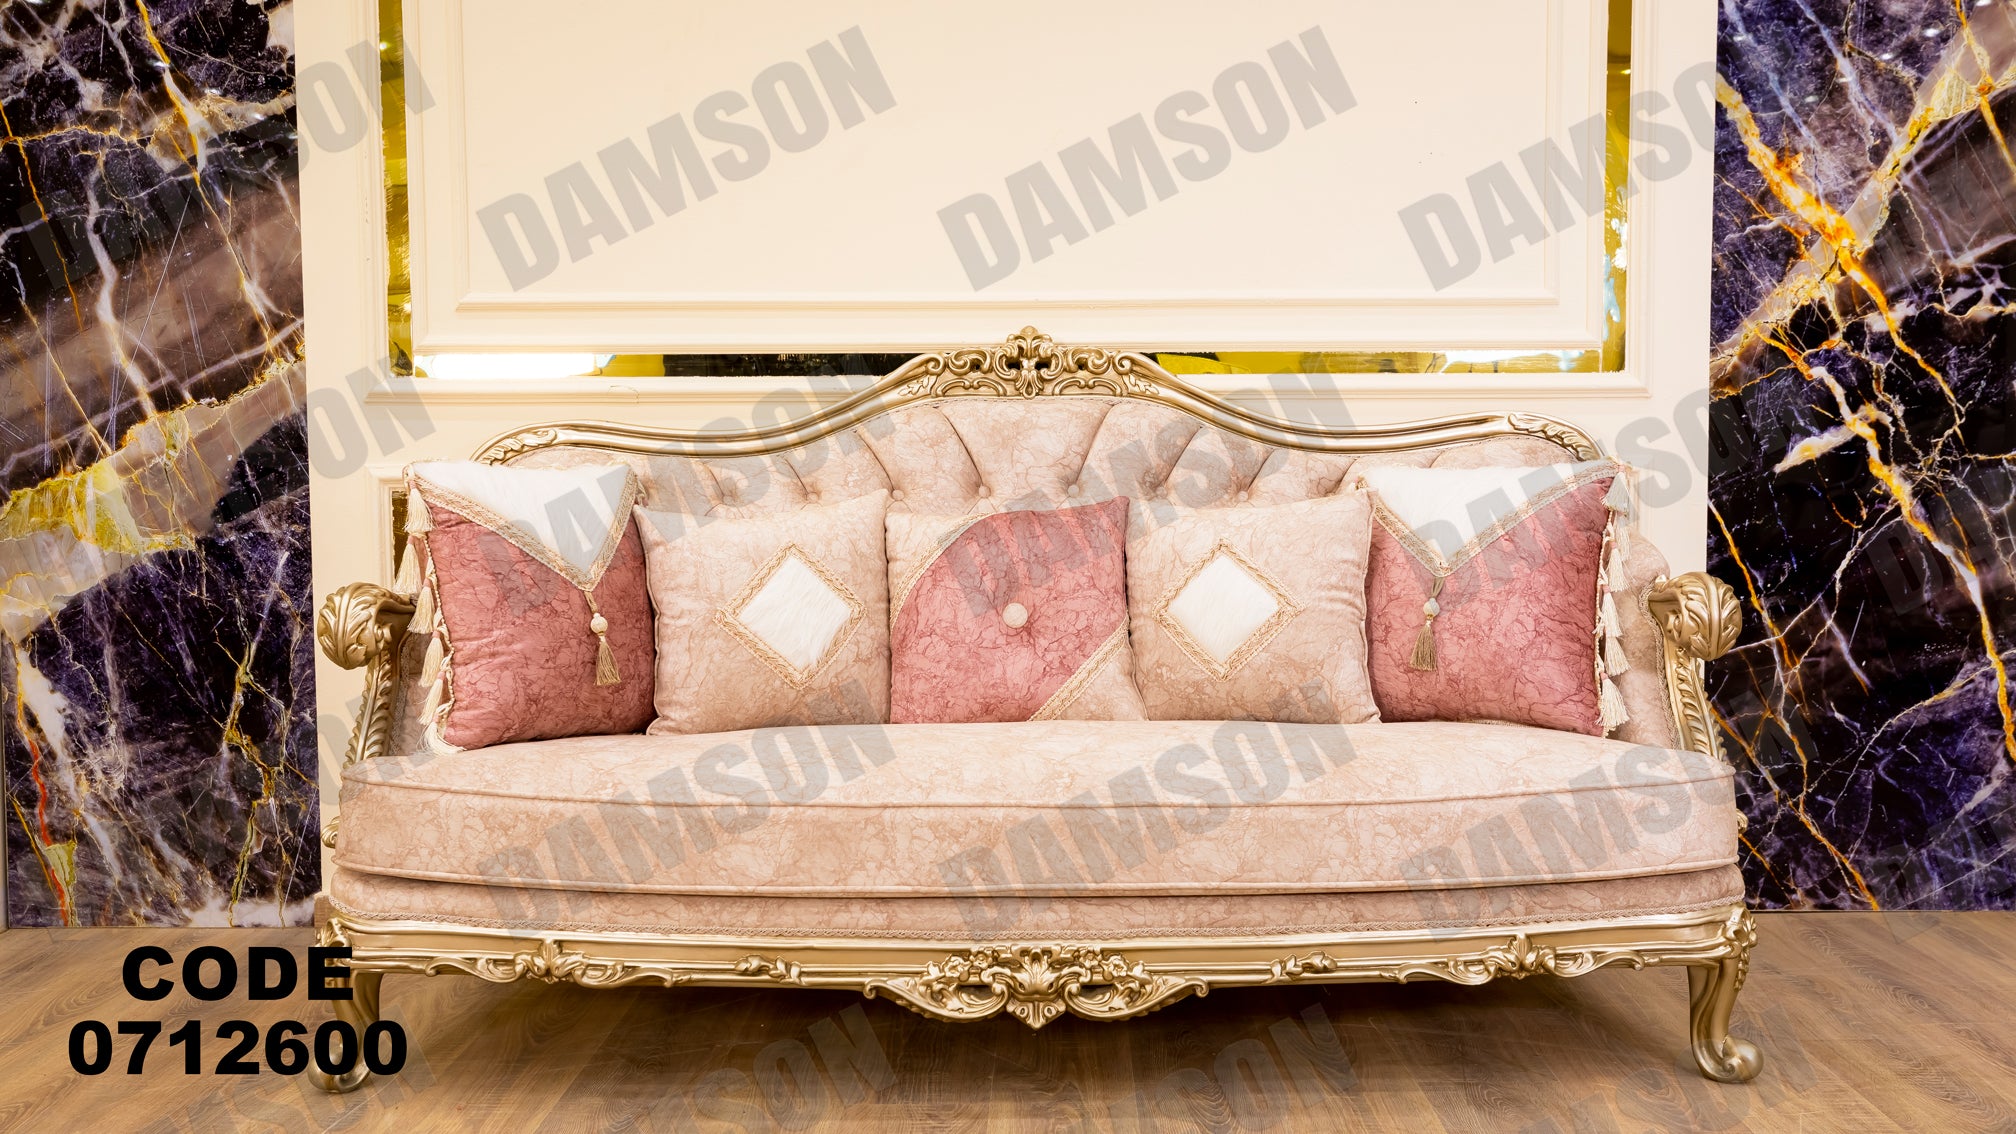 صالون 126 - Damson Furniture